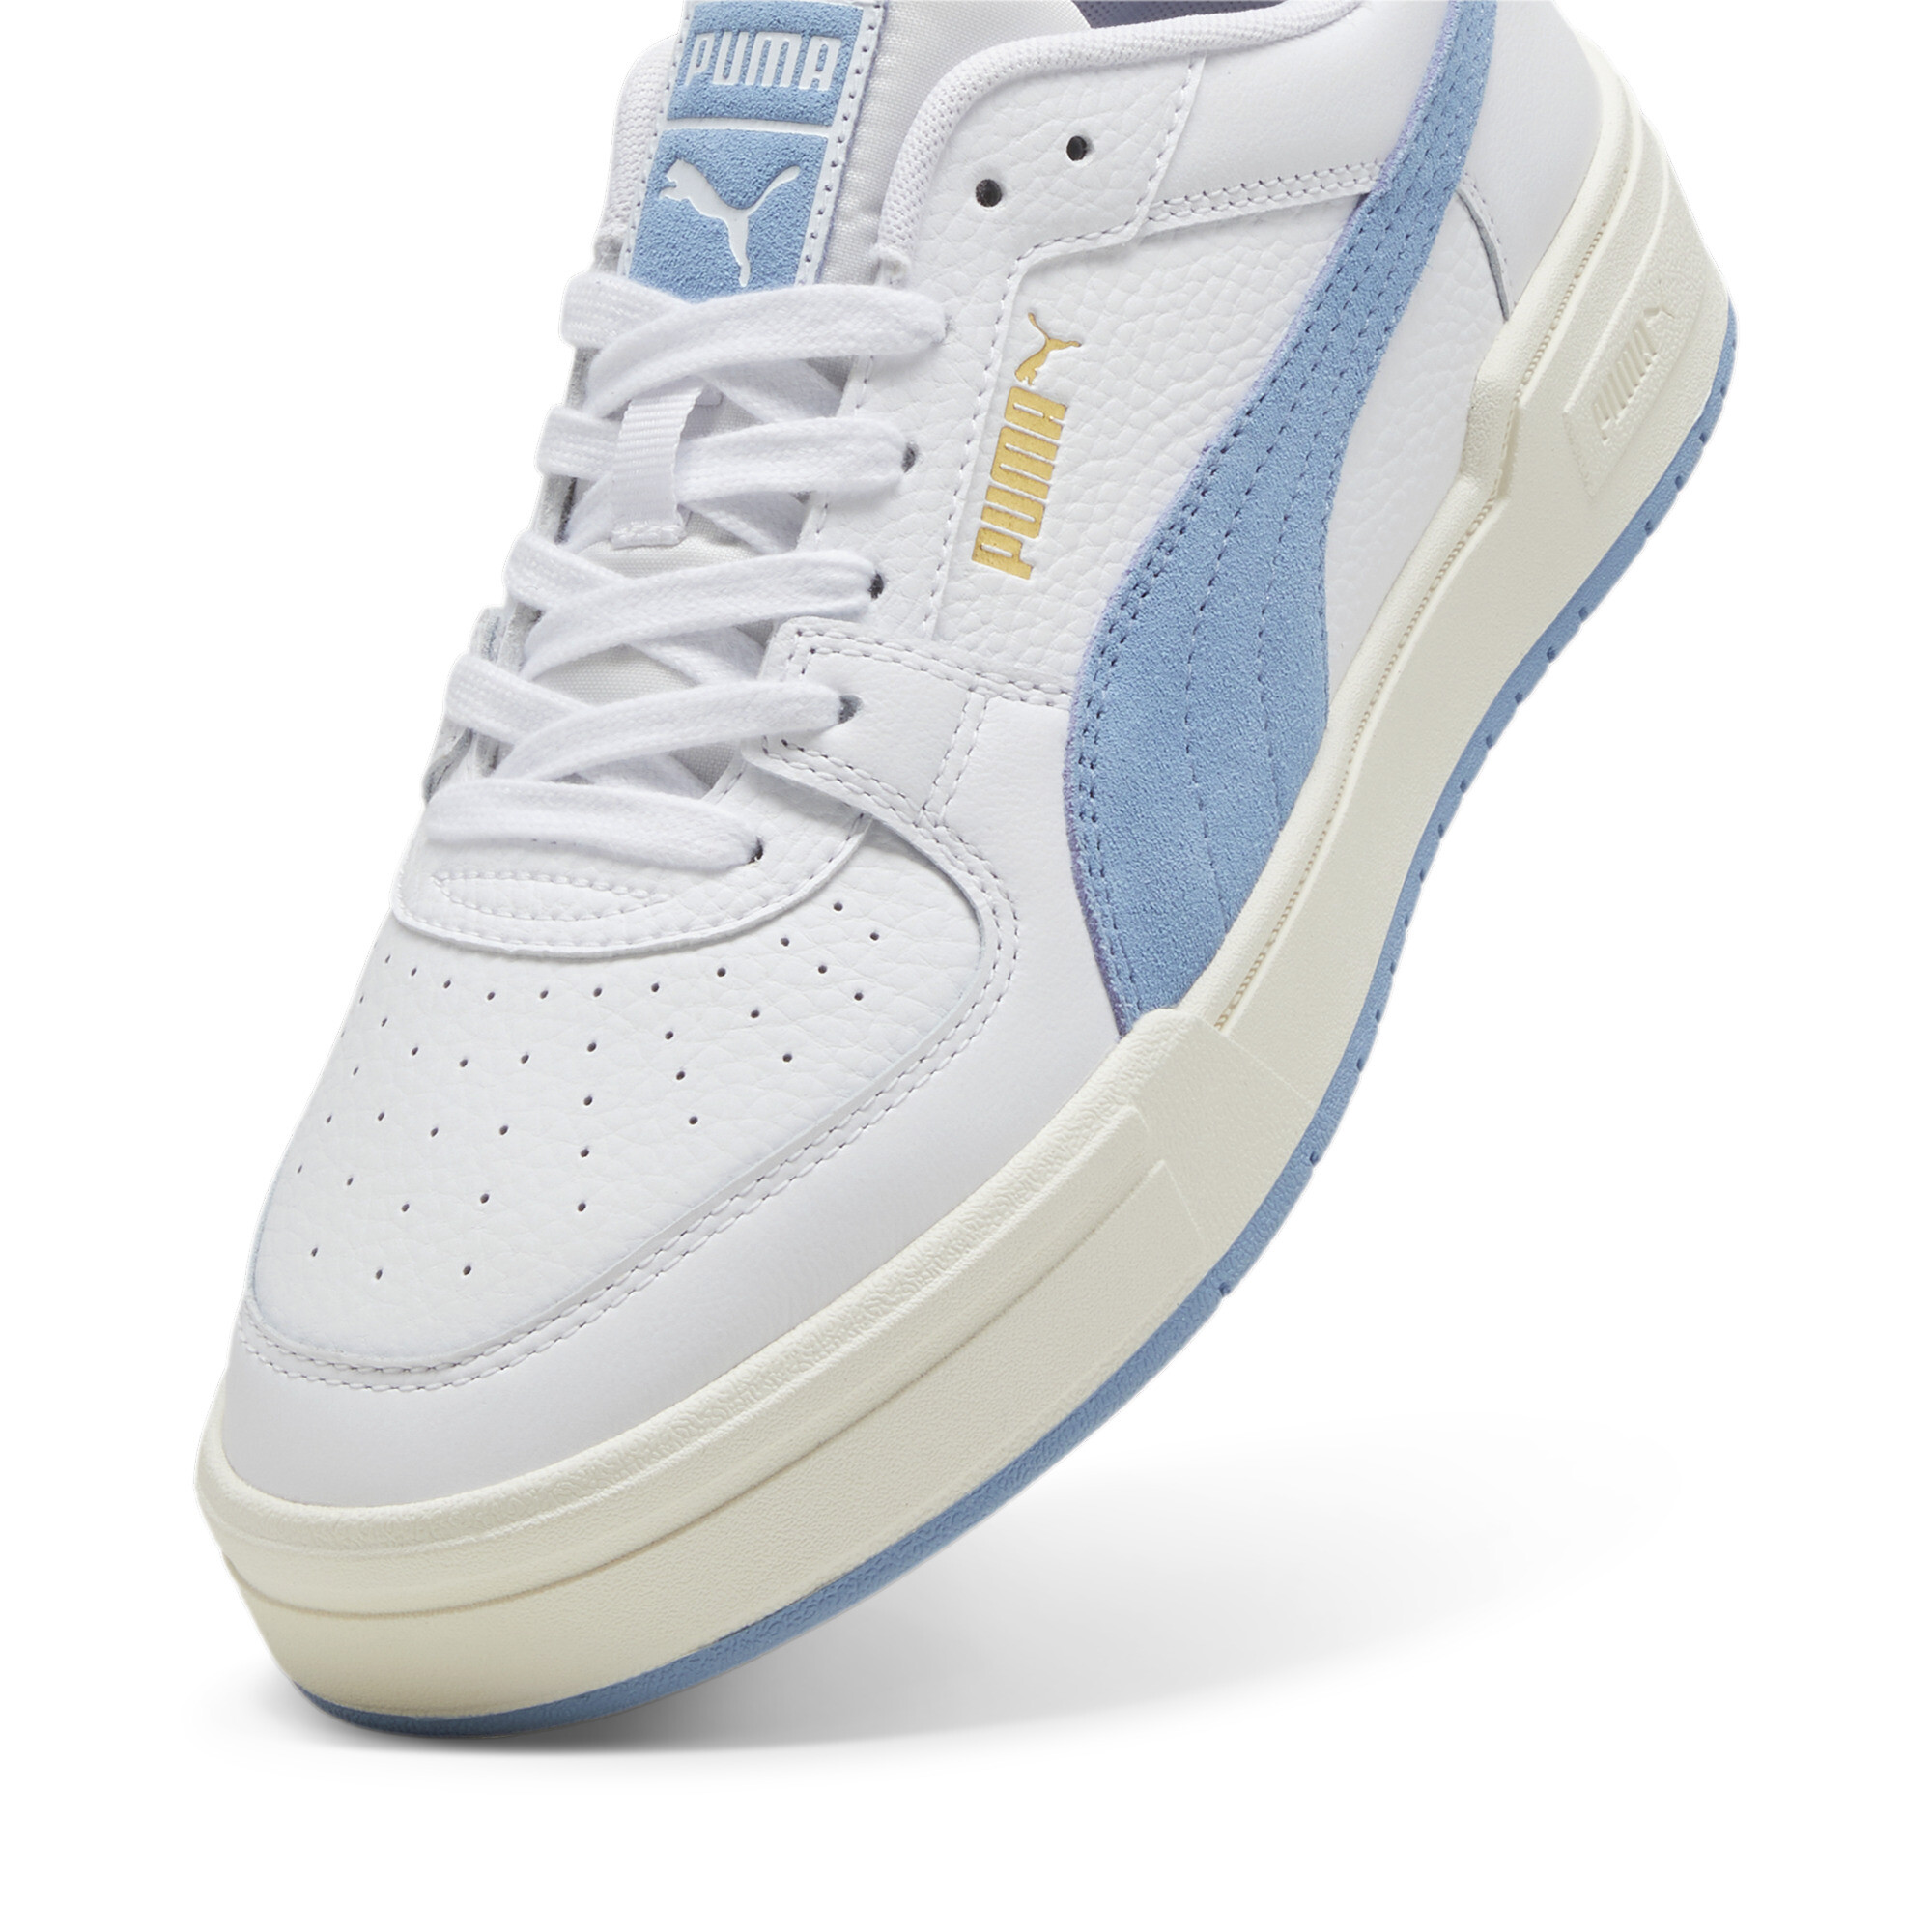 Men's PUMA CA Pro Suede FS Sneakers In White, Size EU 40.5